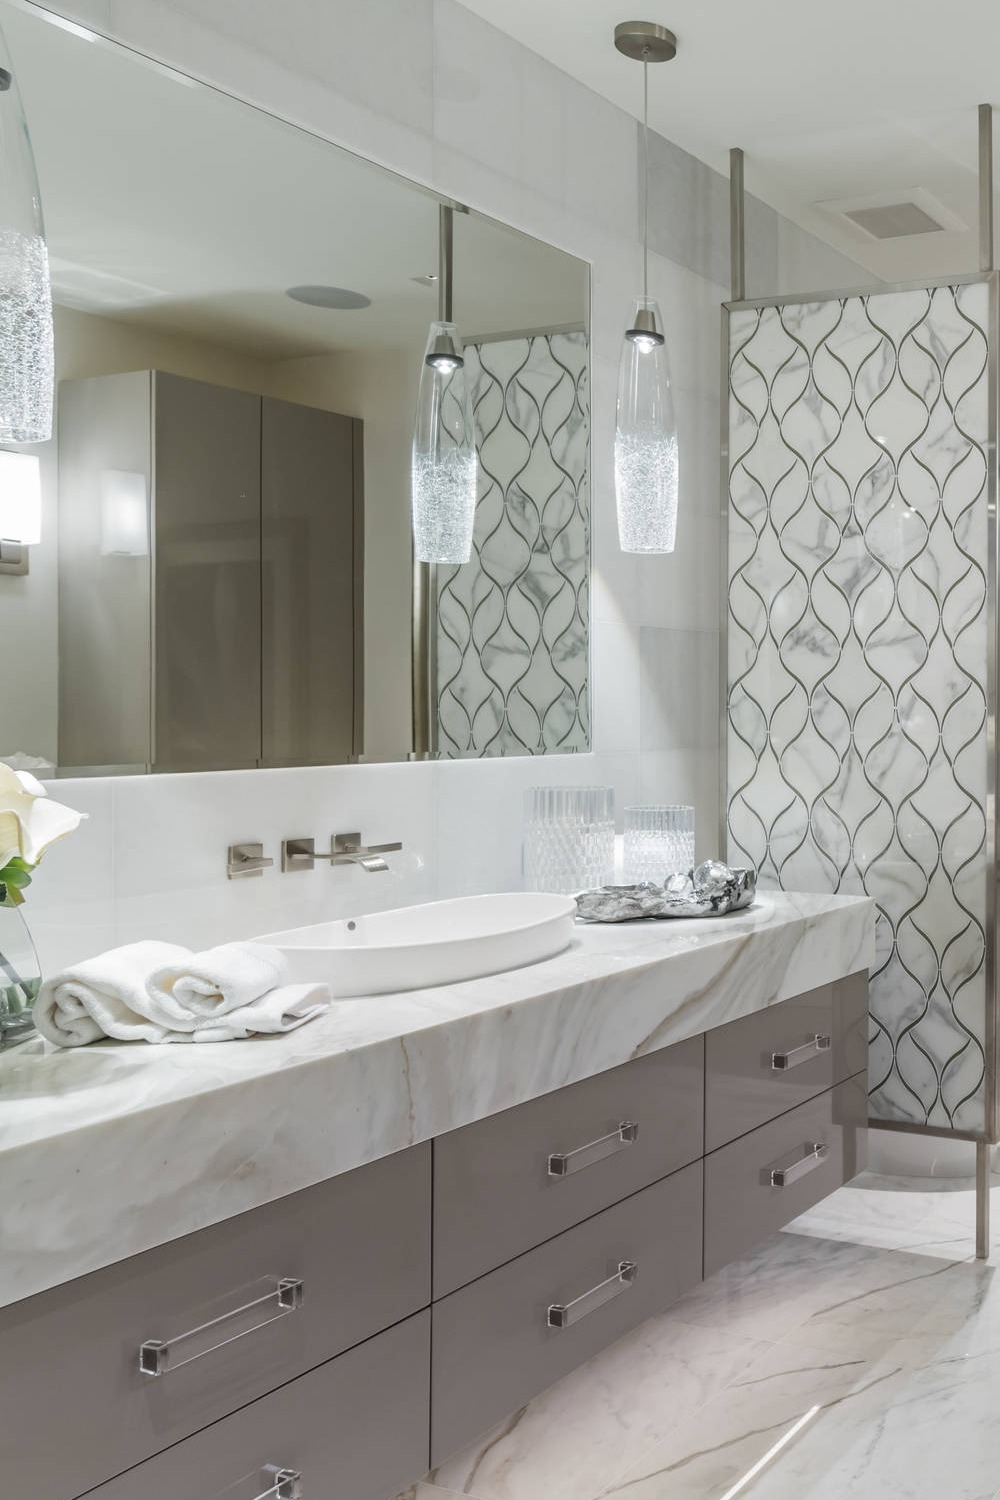 White Marble Countertops Floor Tiles Flat Panel Gray cabinets Beige Walls Vessel Sink